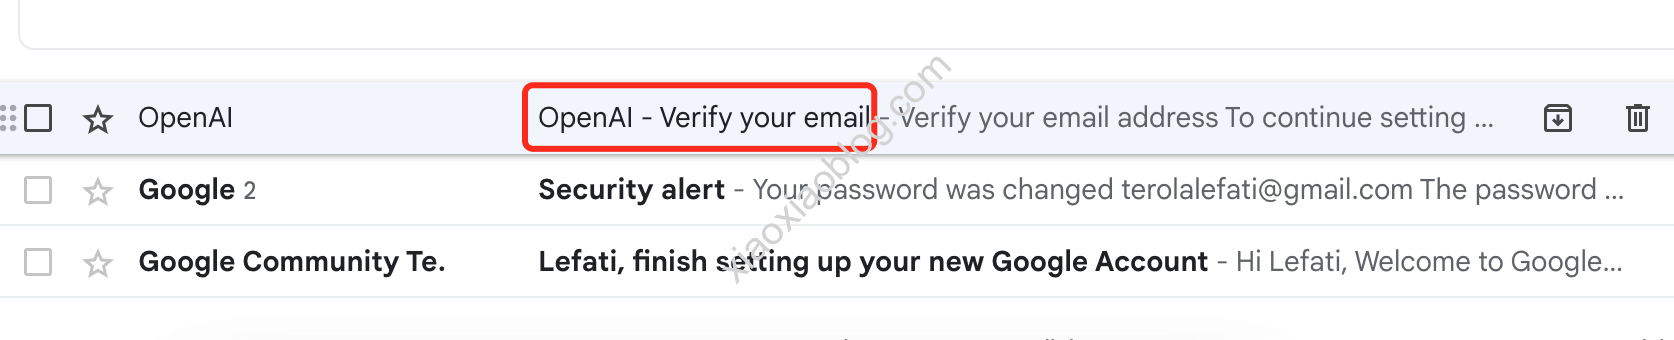 ChatGPT已经验证邮件了，为什么注册时还提示账号不存在